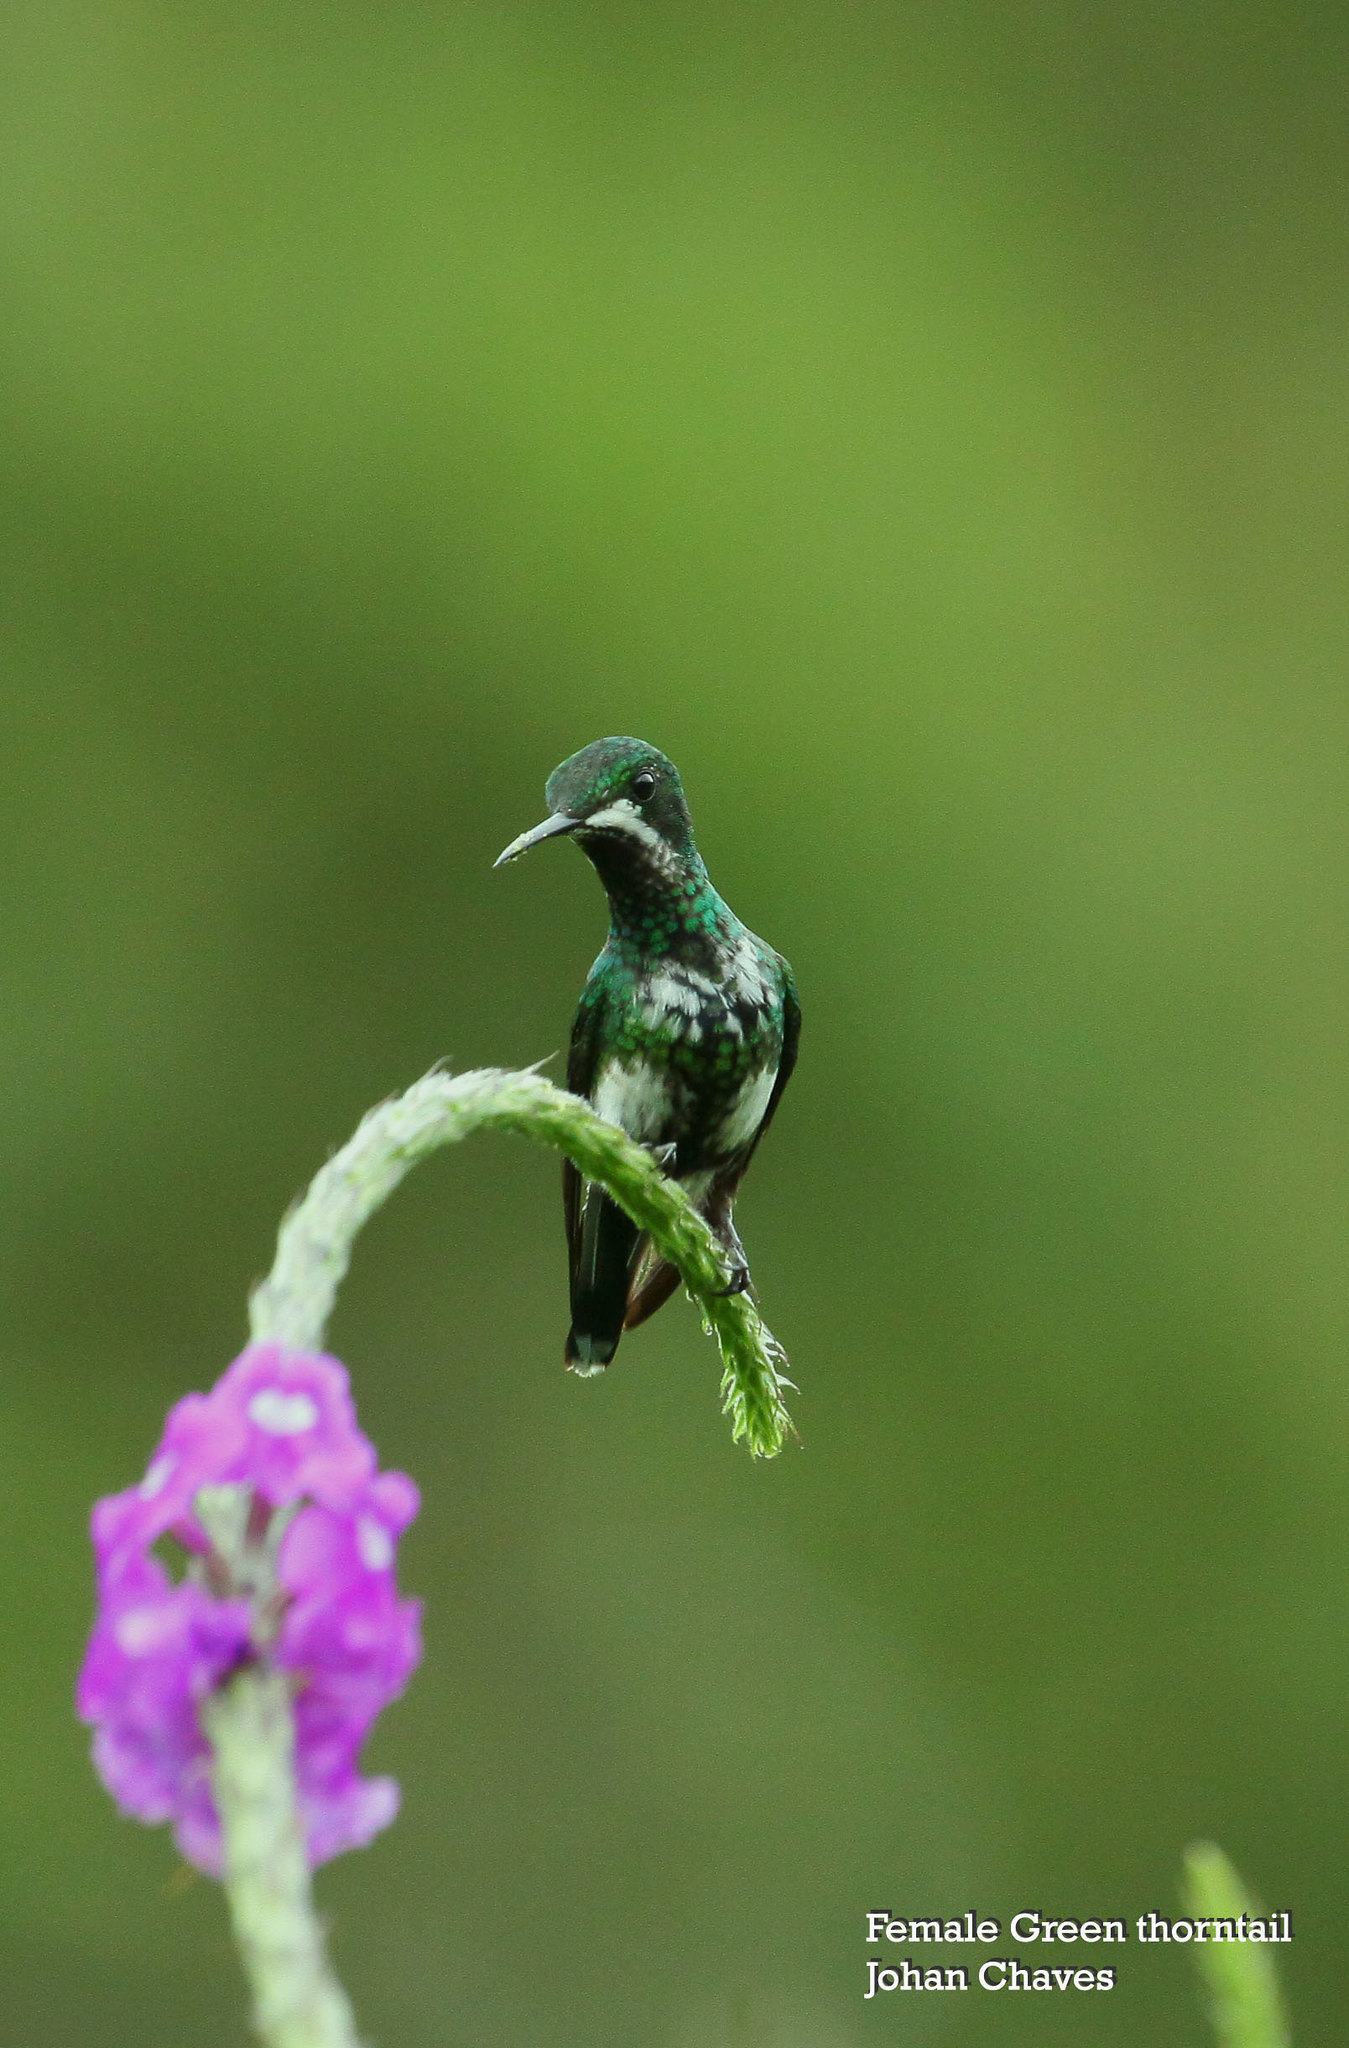 Female green thorntail